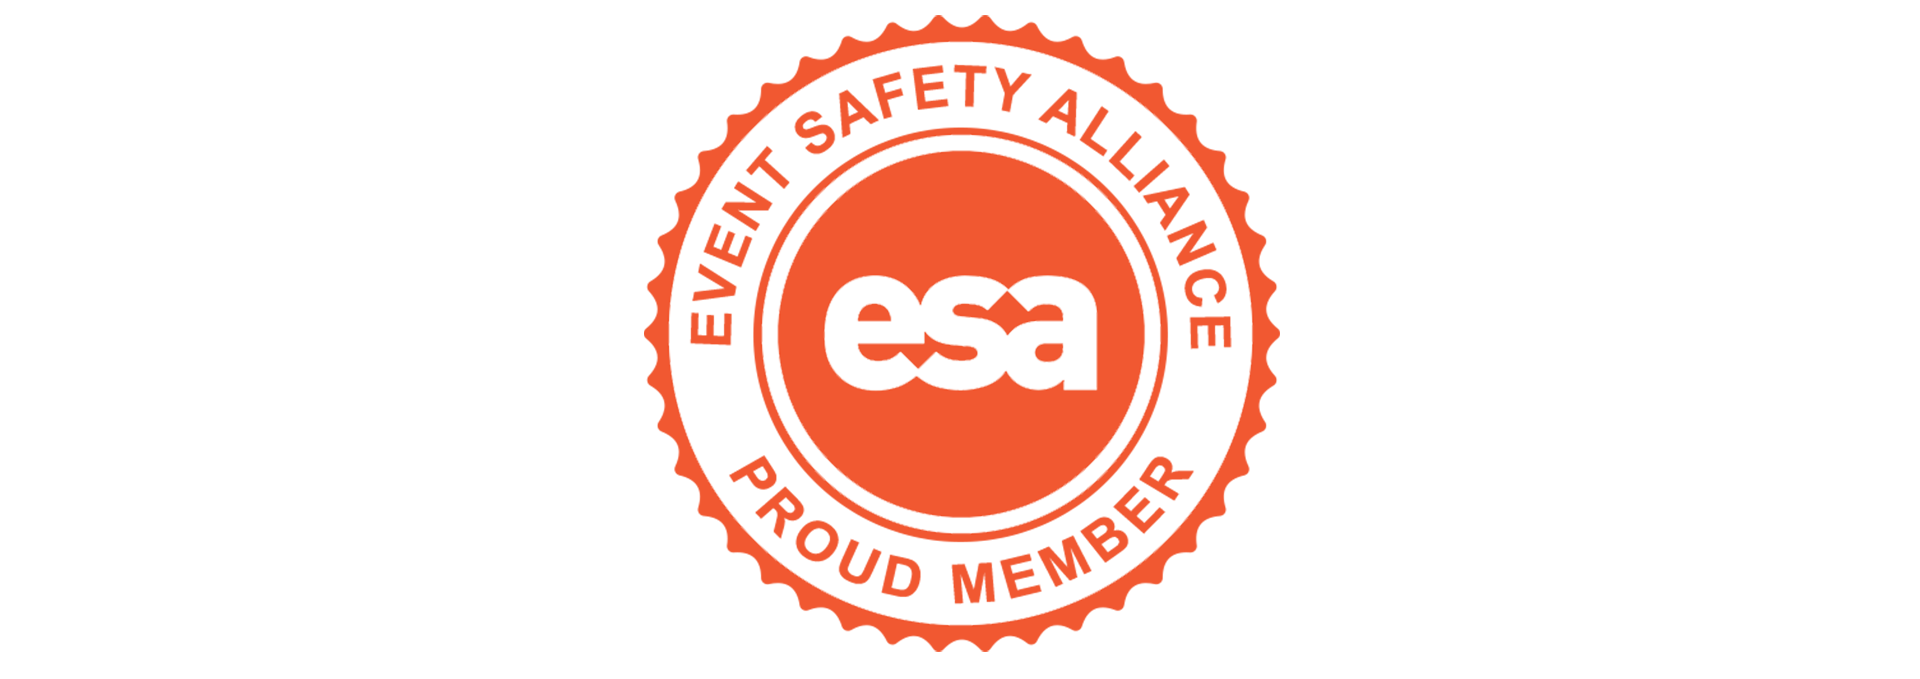 Event Safety Alliance Badge